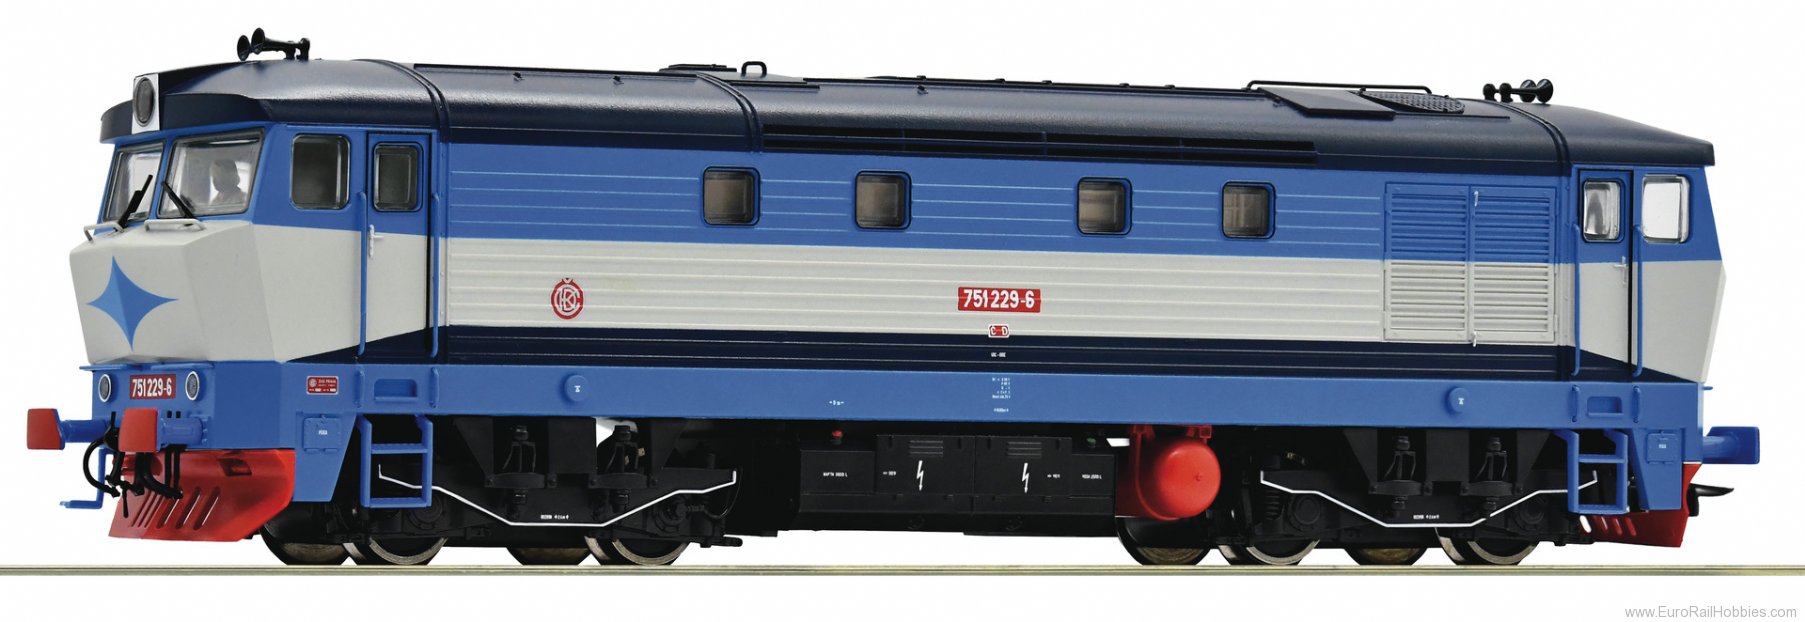 Roco 70925 CD Diesel locomotive 751 229-6,  DCC w/Sound